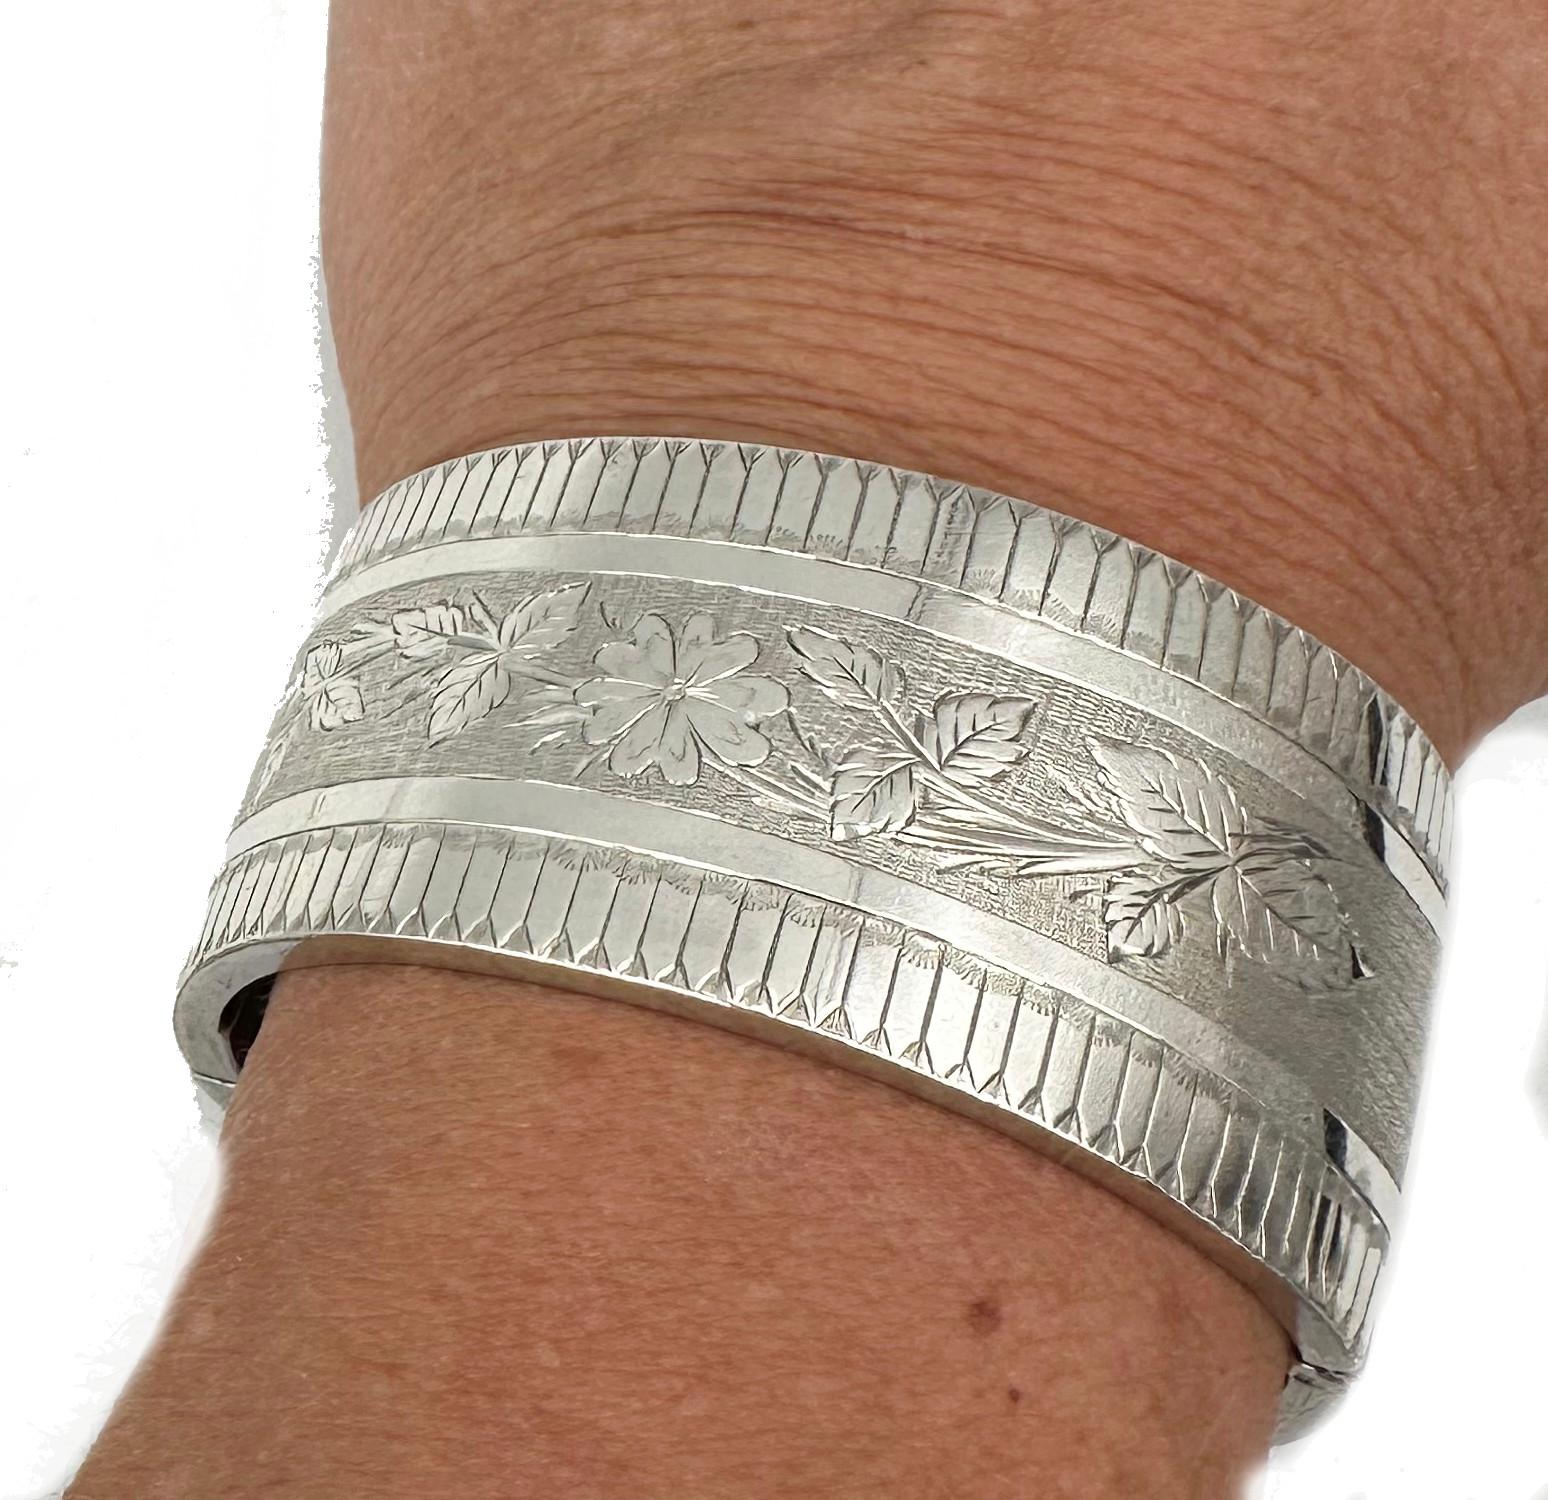  Antique Wide Victorian Silver Geometric Floral Bangle Cuff Bracelet  2